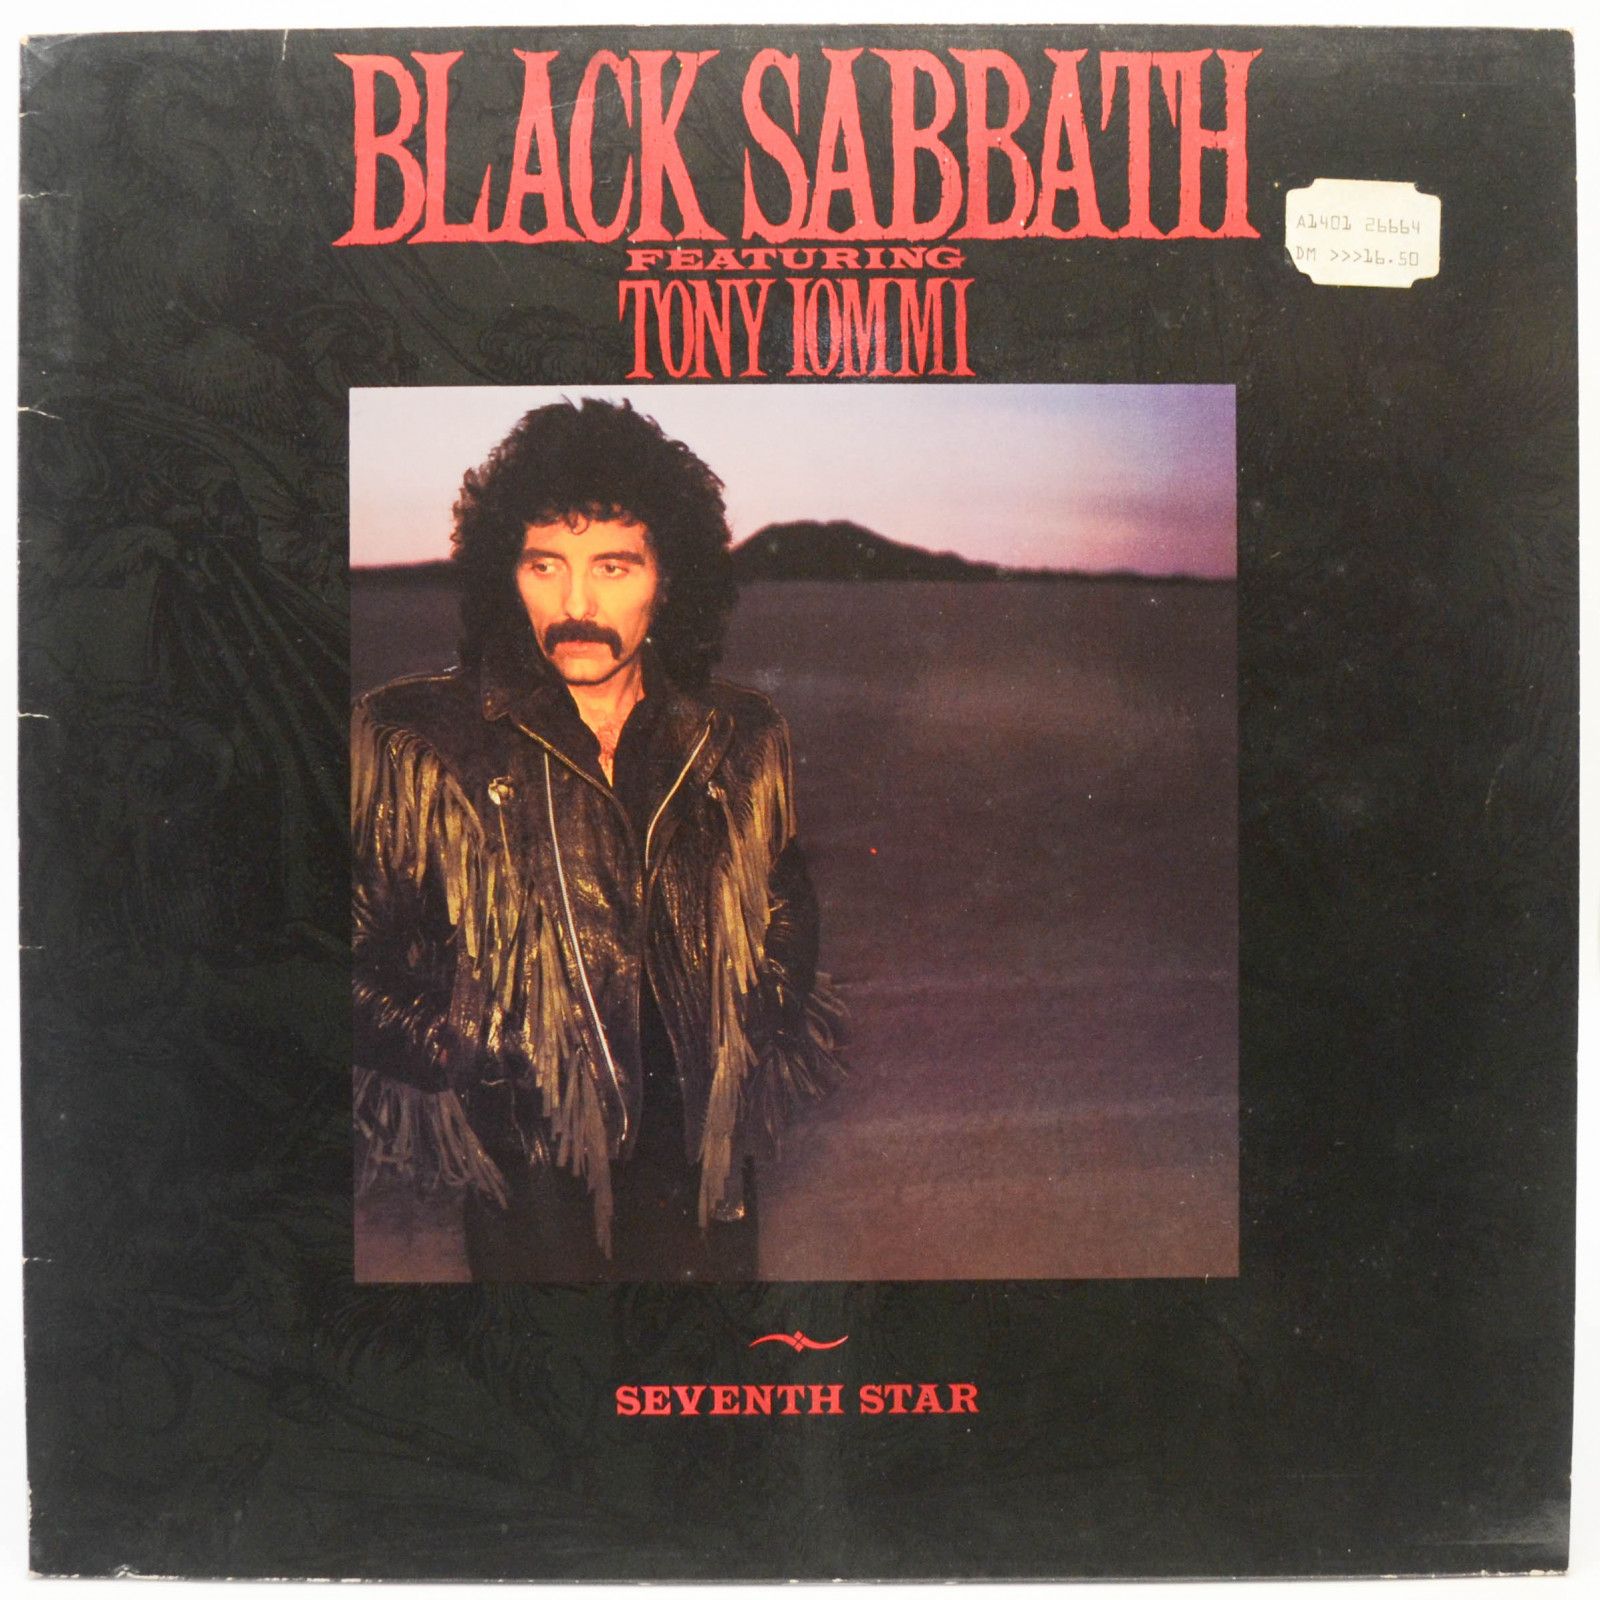 Black Sabbath Featuring Tony Iommi — Seventh Star, 1986